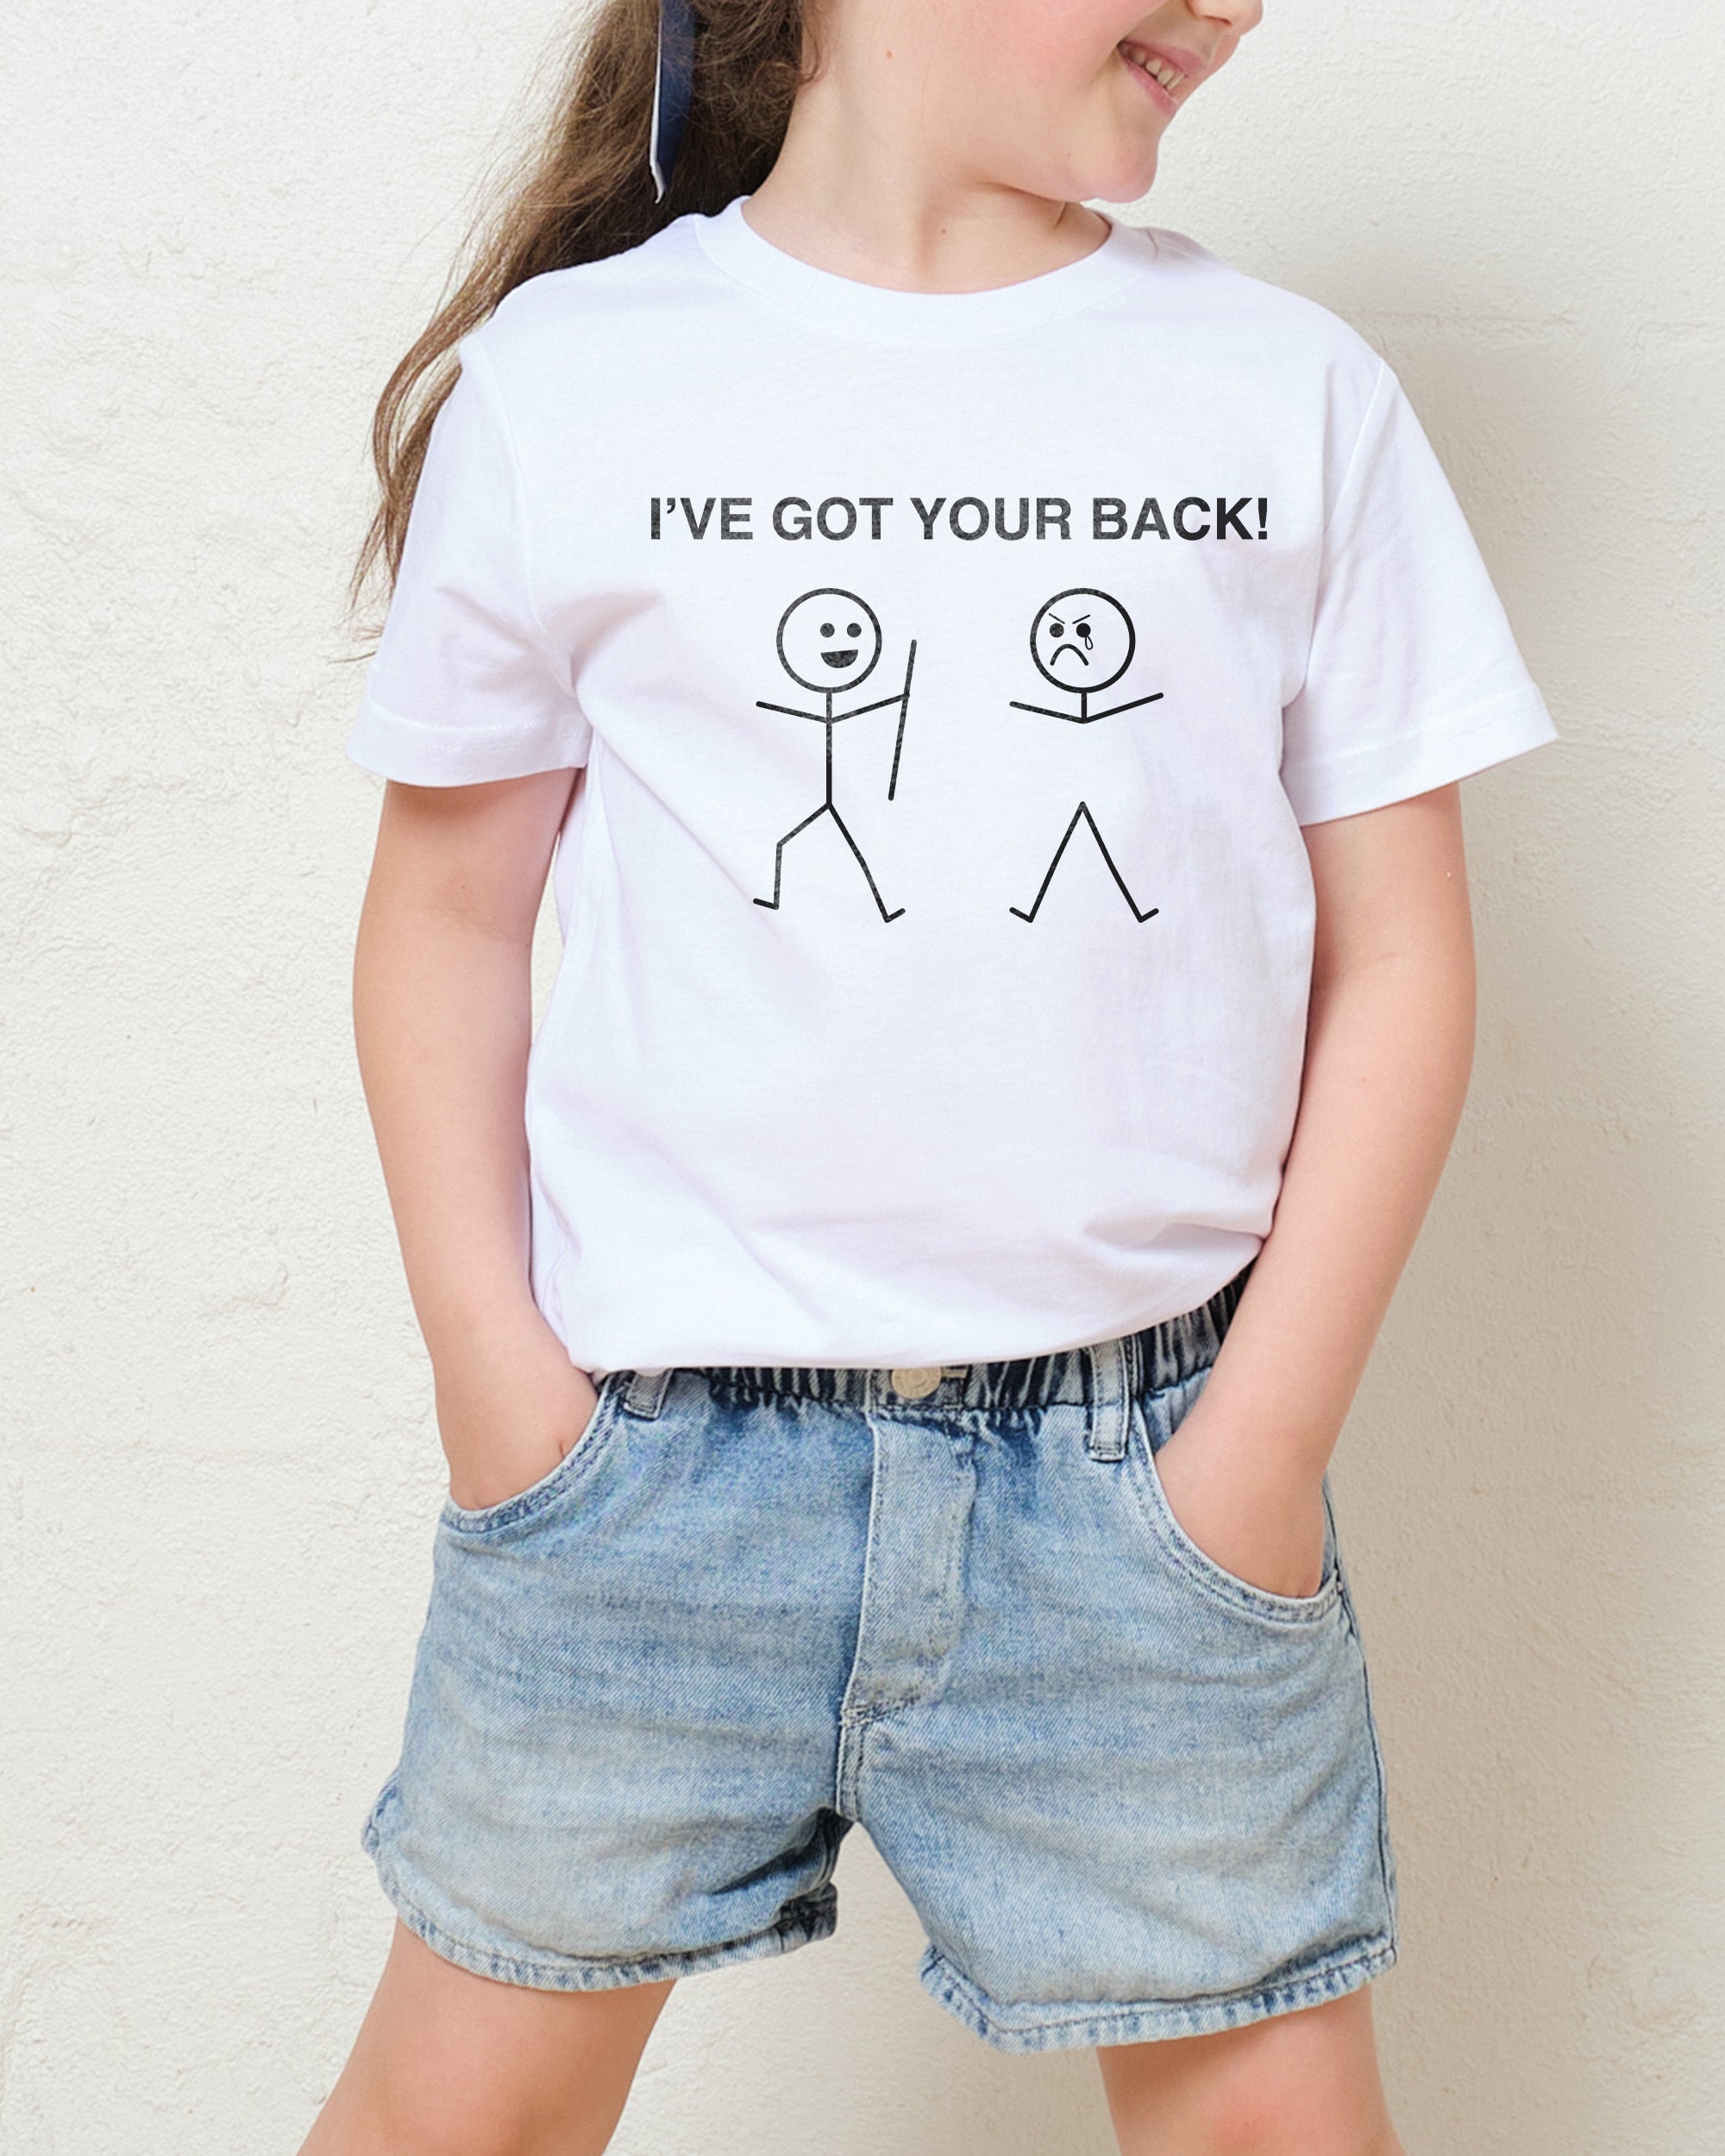 Got Your Back Kids T-Shirt